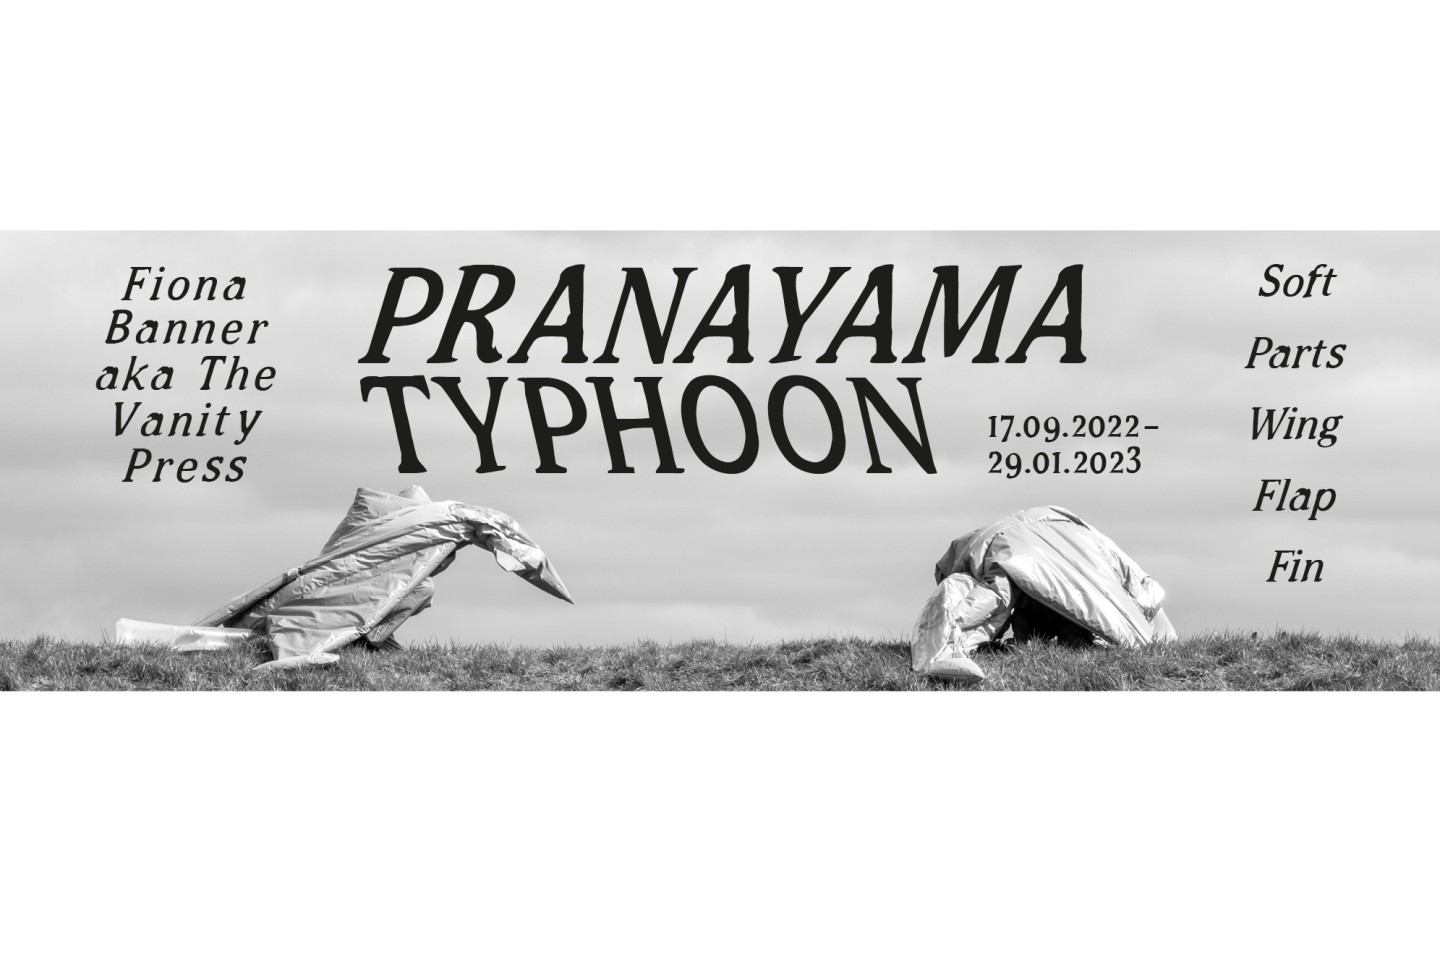 Fiona Banner aka The Vanity Press: Pranayama Typhoon Soft Parts Wing Flap Fin